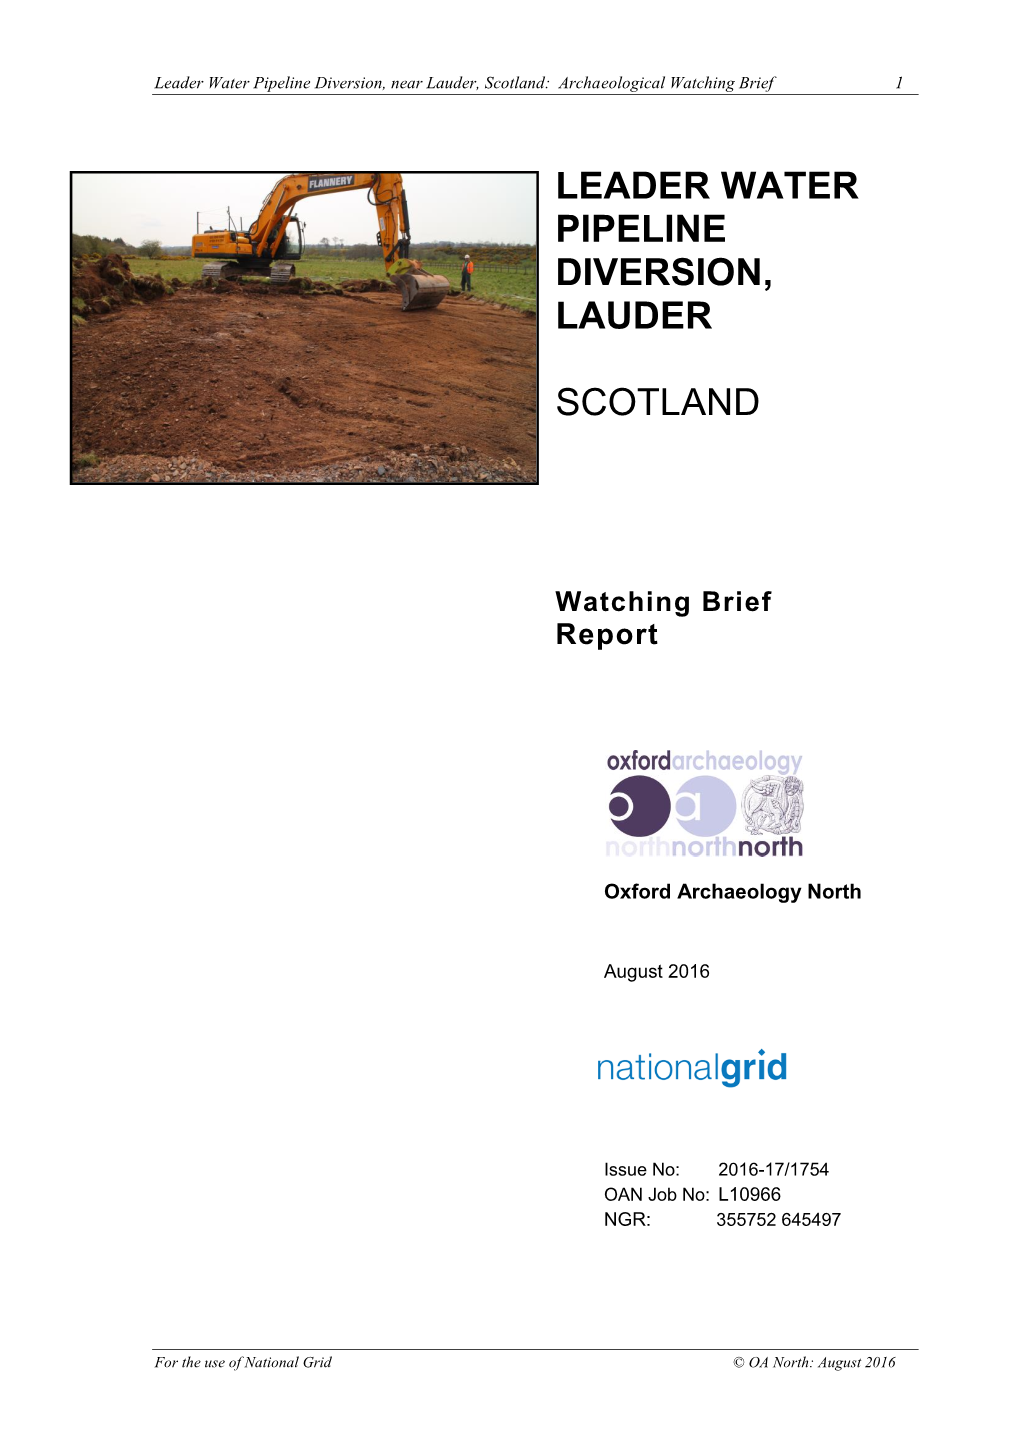 Leader Water Pipeline Diversion, Lauder Scotland